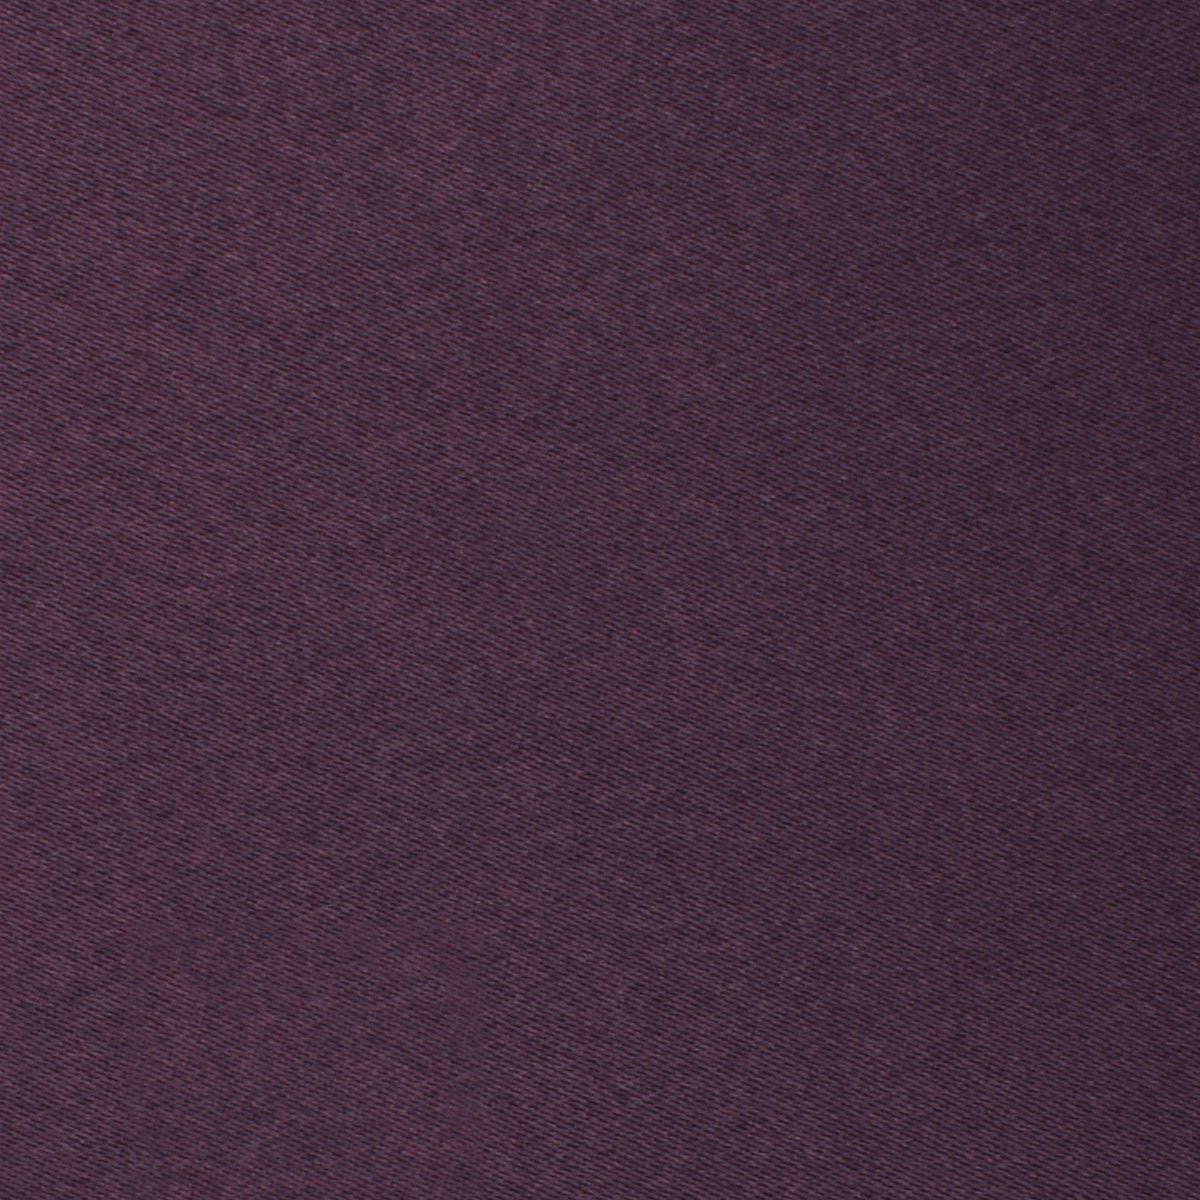 Aubergine Purple Satin Necktie Fabric